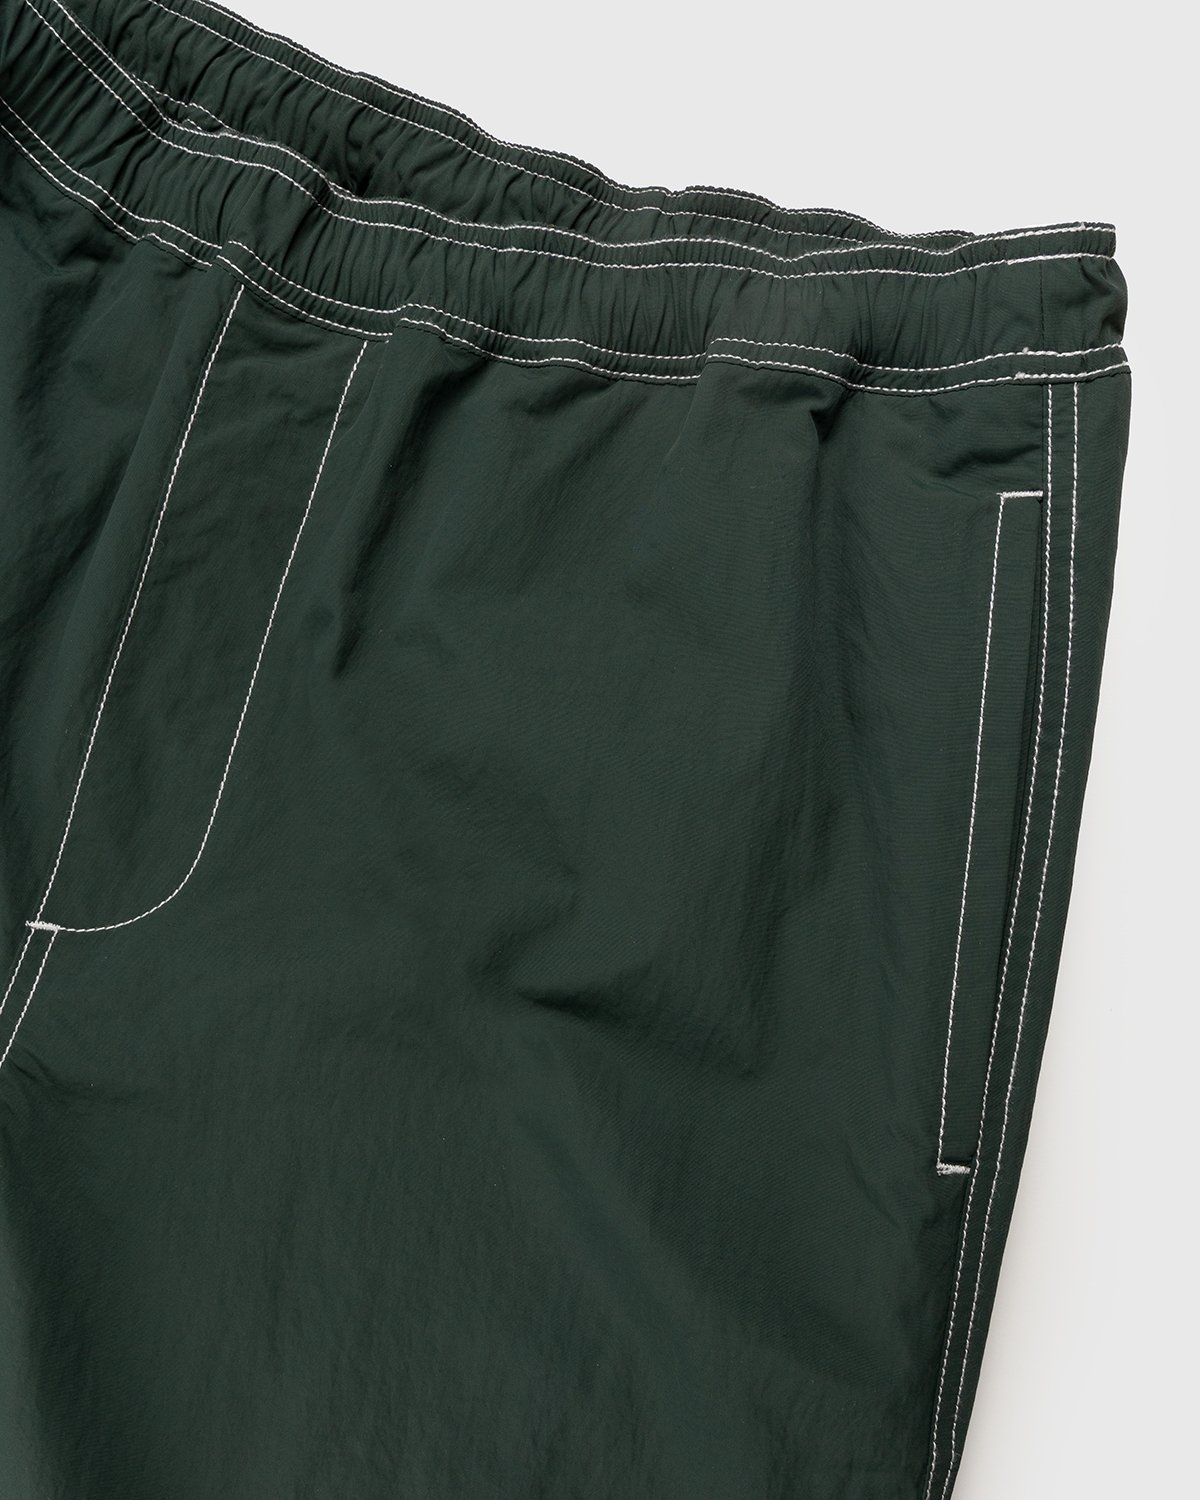 Highsnobiety - Contrast Brushed Nylon Elastic Pants Green - Clothing - Green - Image 5